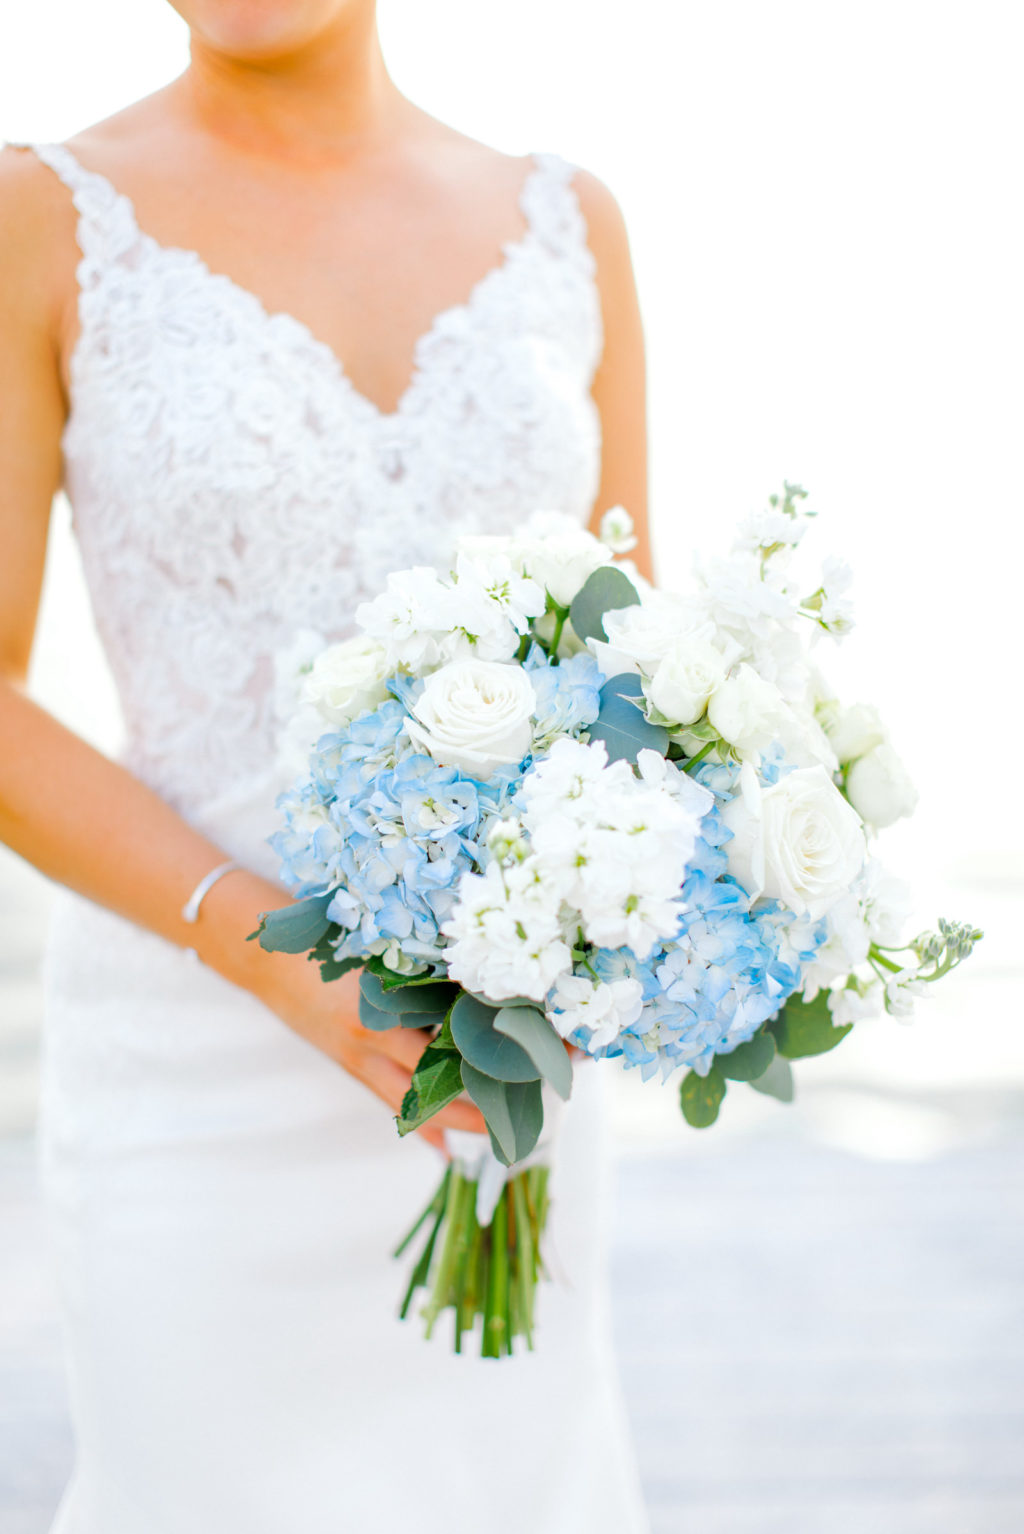 Bride Wedding Portrait in Morilee Wedding Dress | White and Dusty Pastel Blue Hydrangea Wedding Bouquet